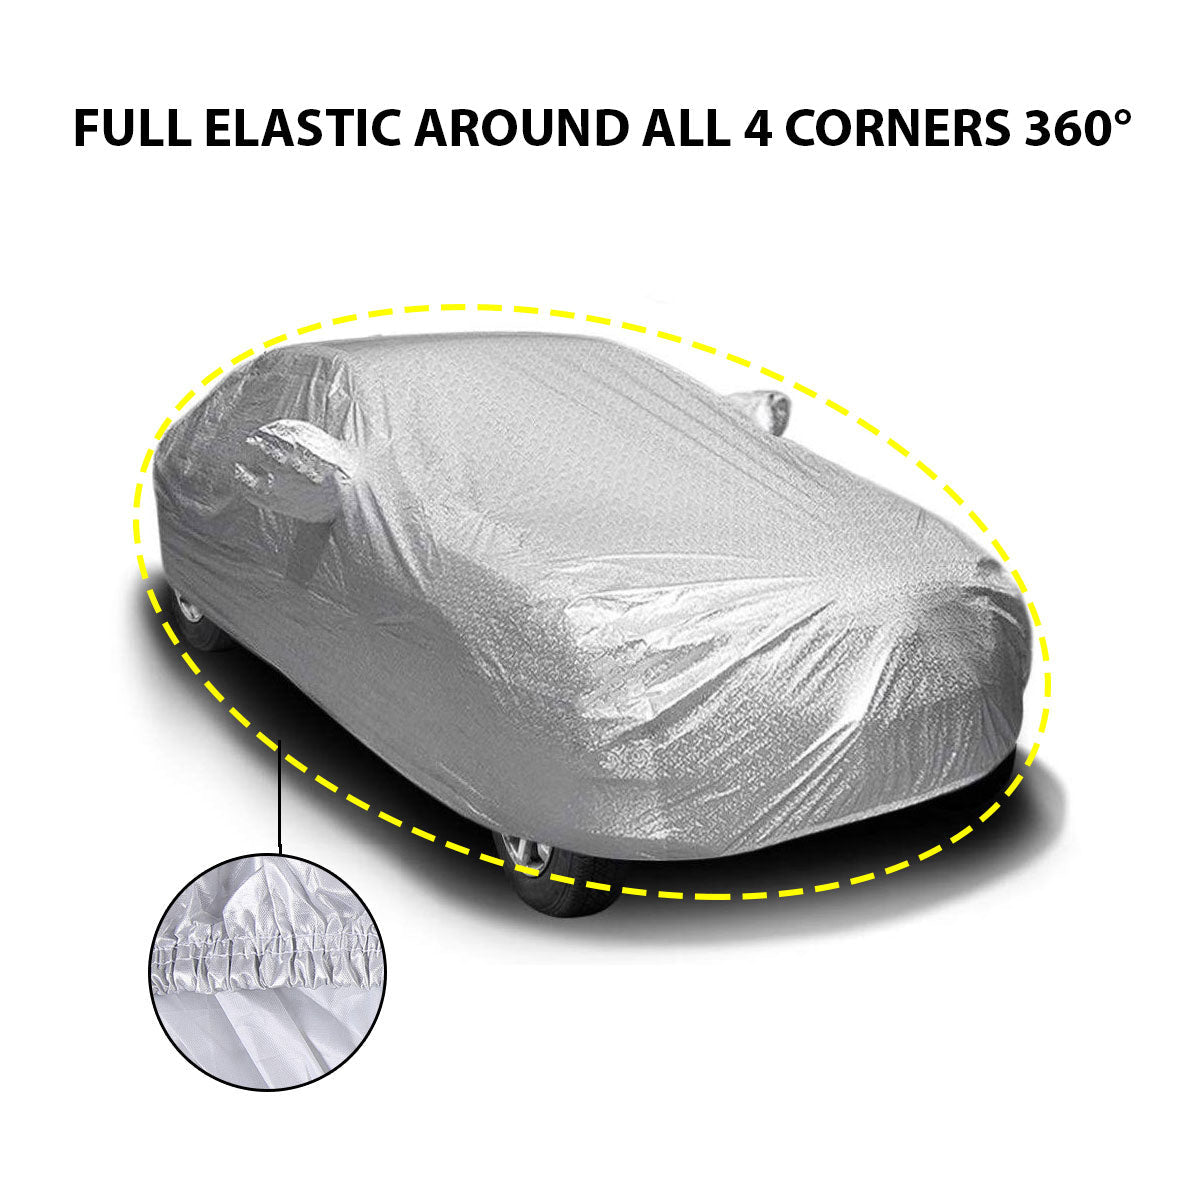 Oshotto Spyro Silver Anti Reflective, dustproof and Water Proof Car Body Cover with Mirror Pockets For Maruti Suzuki Esteem